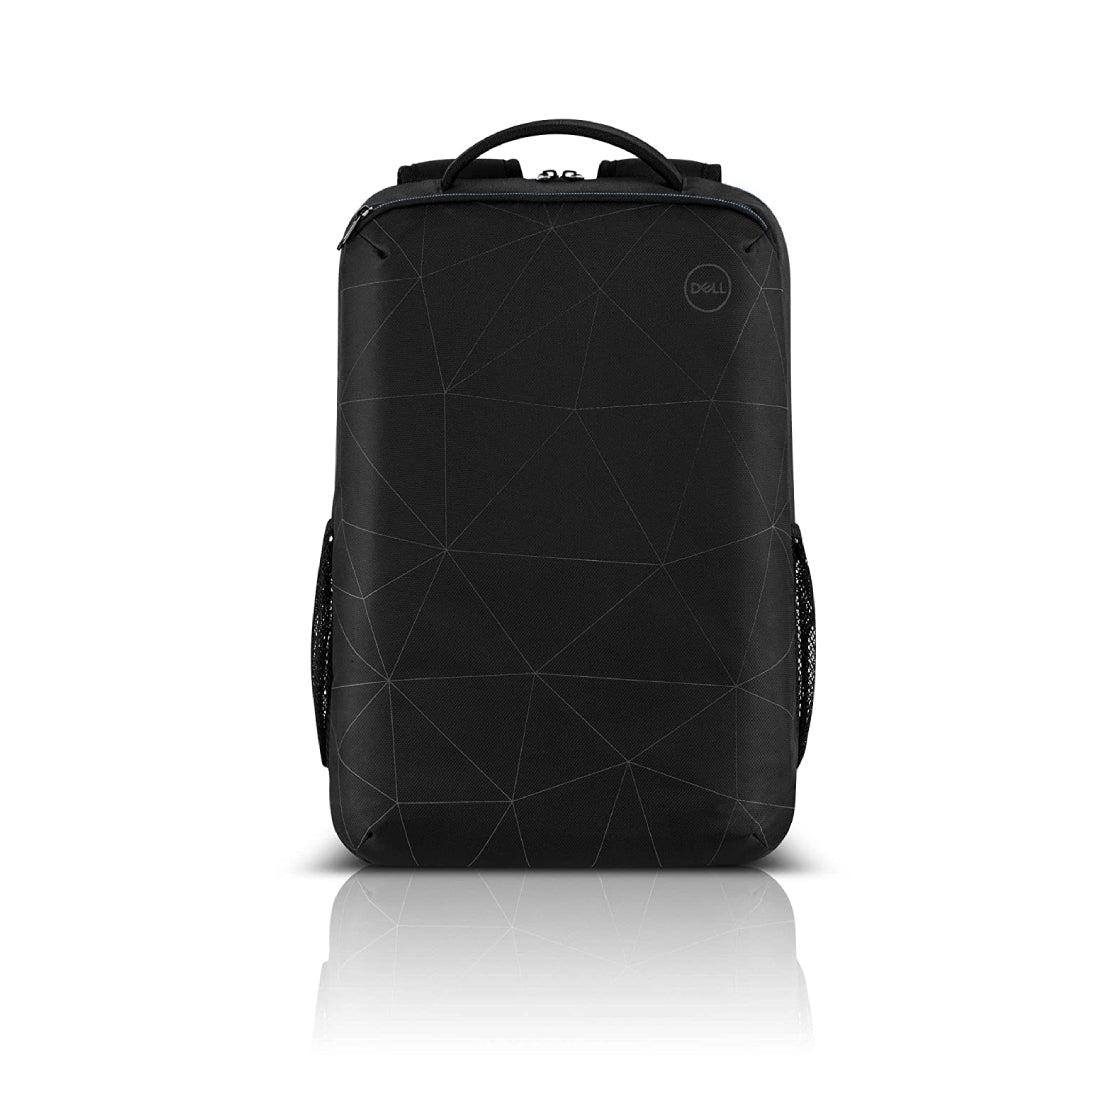 Dell ES1520P Essential Backpack - Black - حقيبة حاسوب محمول - Store 974 | ستور ٩٧٤